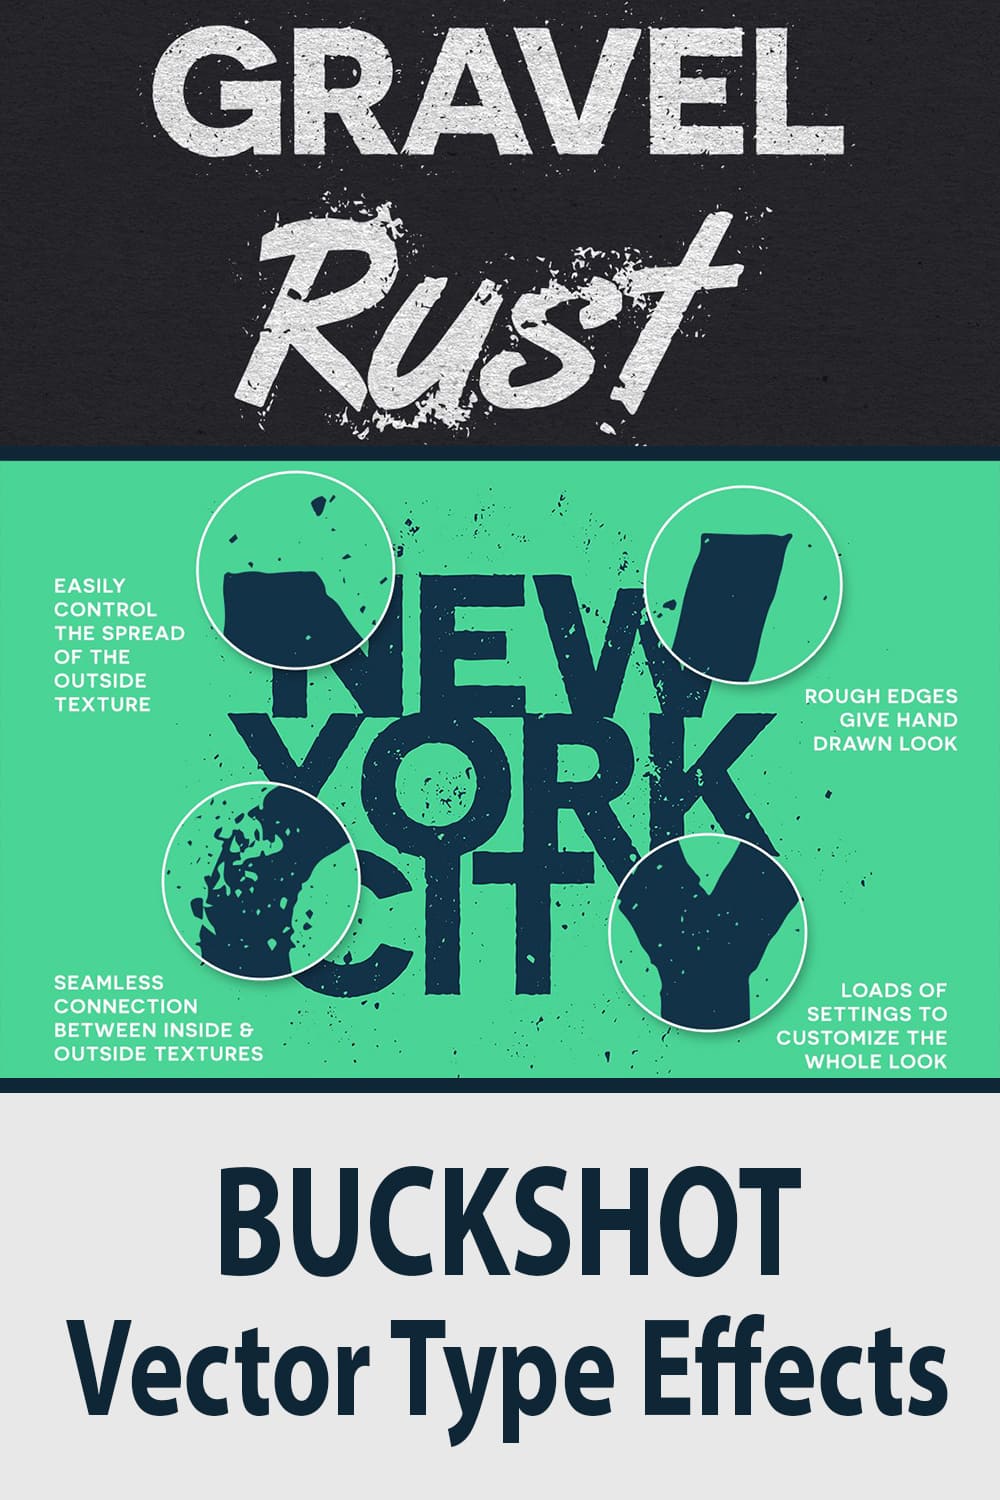 BUCKSHOT Vector Type Effects by MasterBundles Pinterest Collage Image.